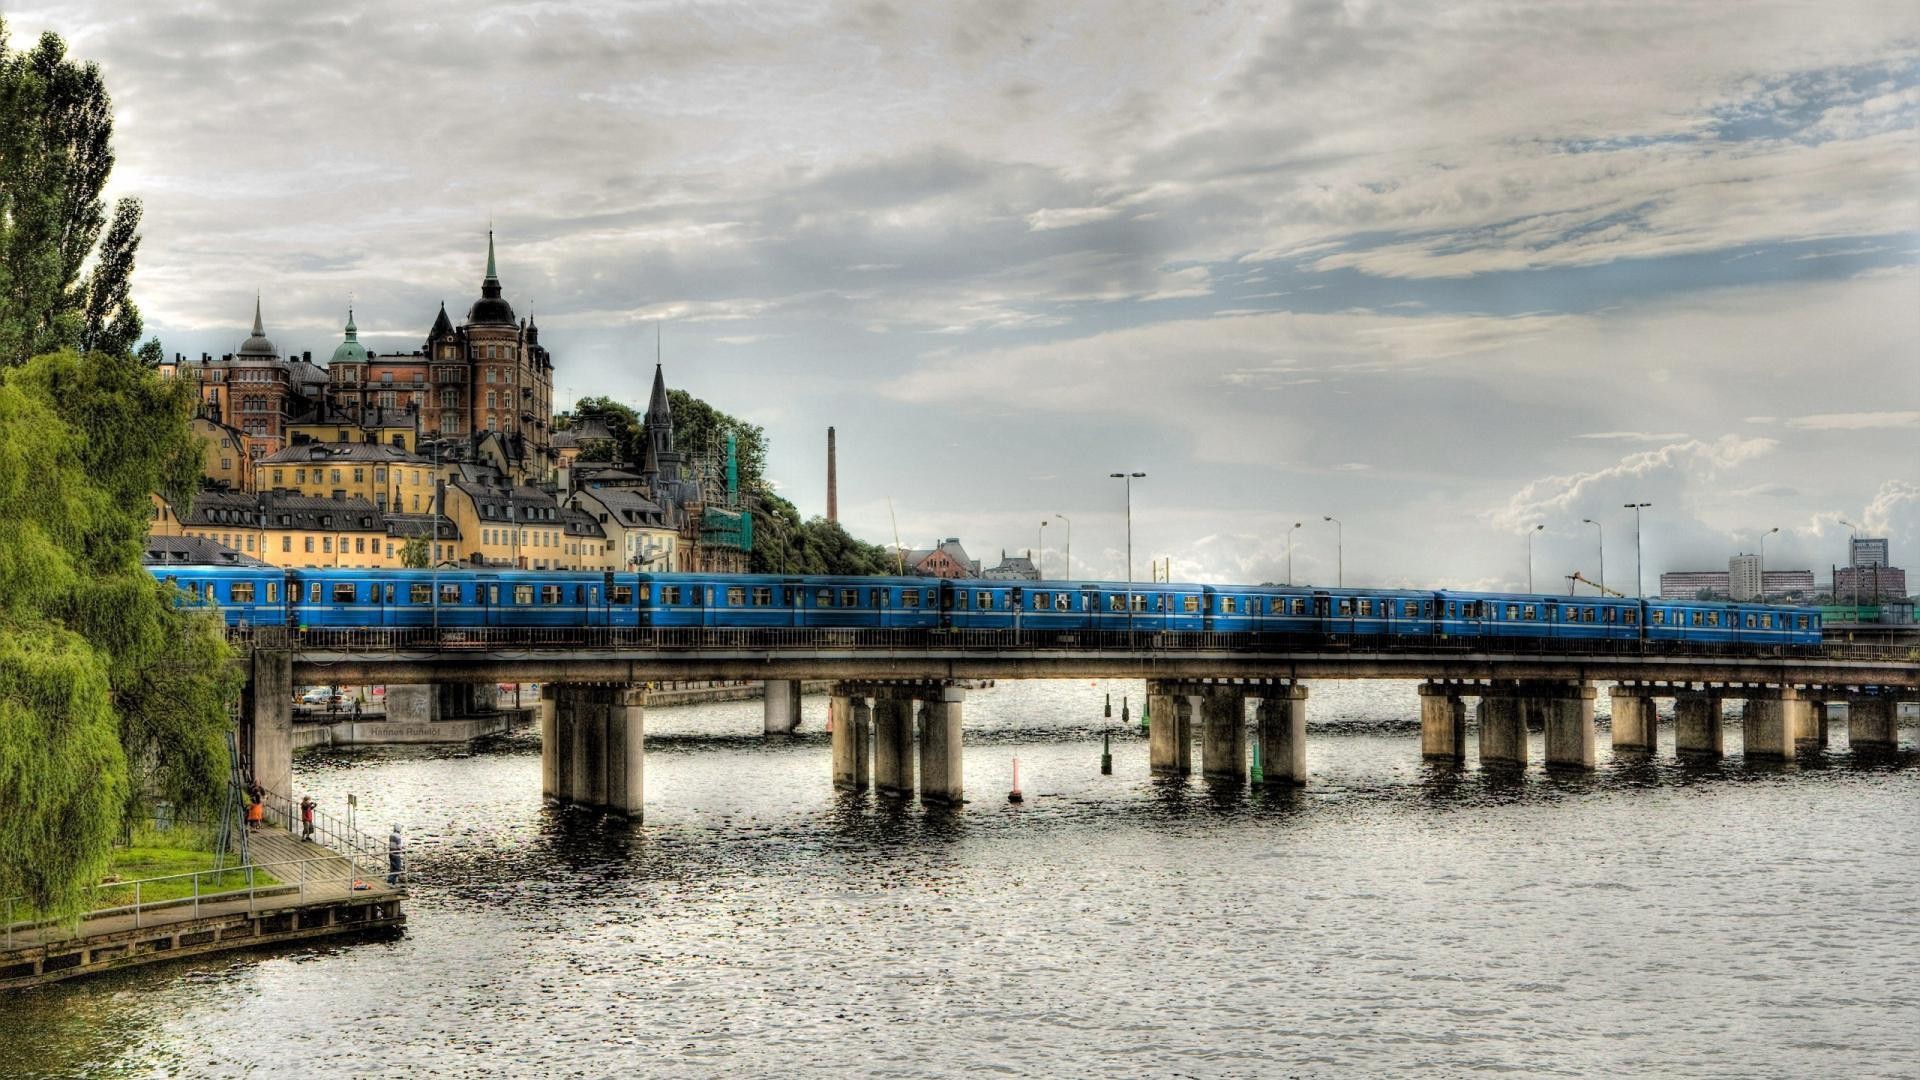 Train on the bridge, Sweden